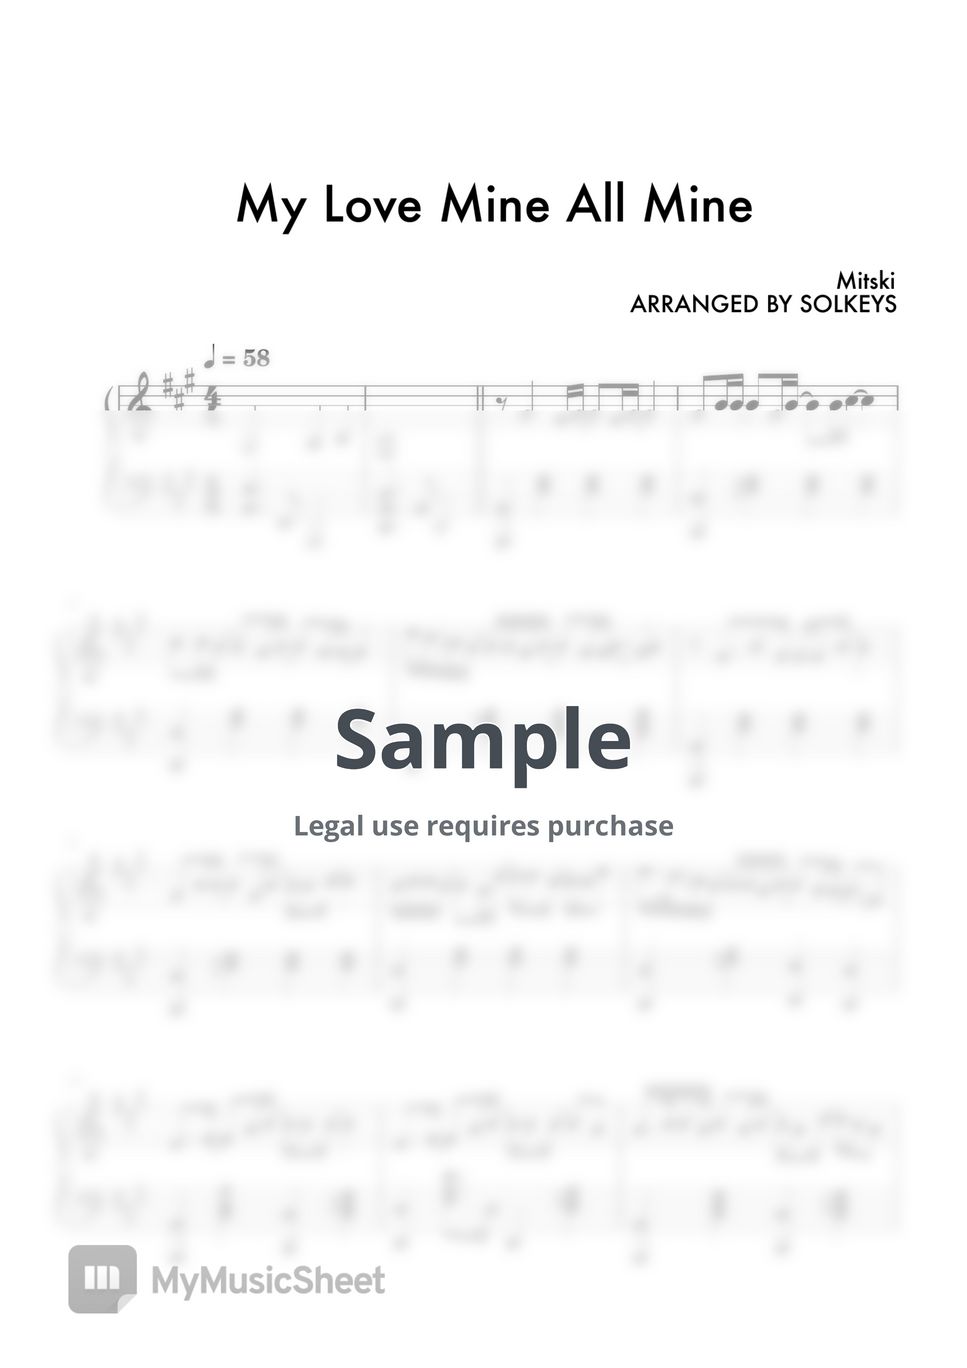 Mitski - My Love Mine All Mine by SolKeys